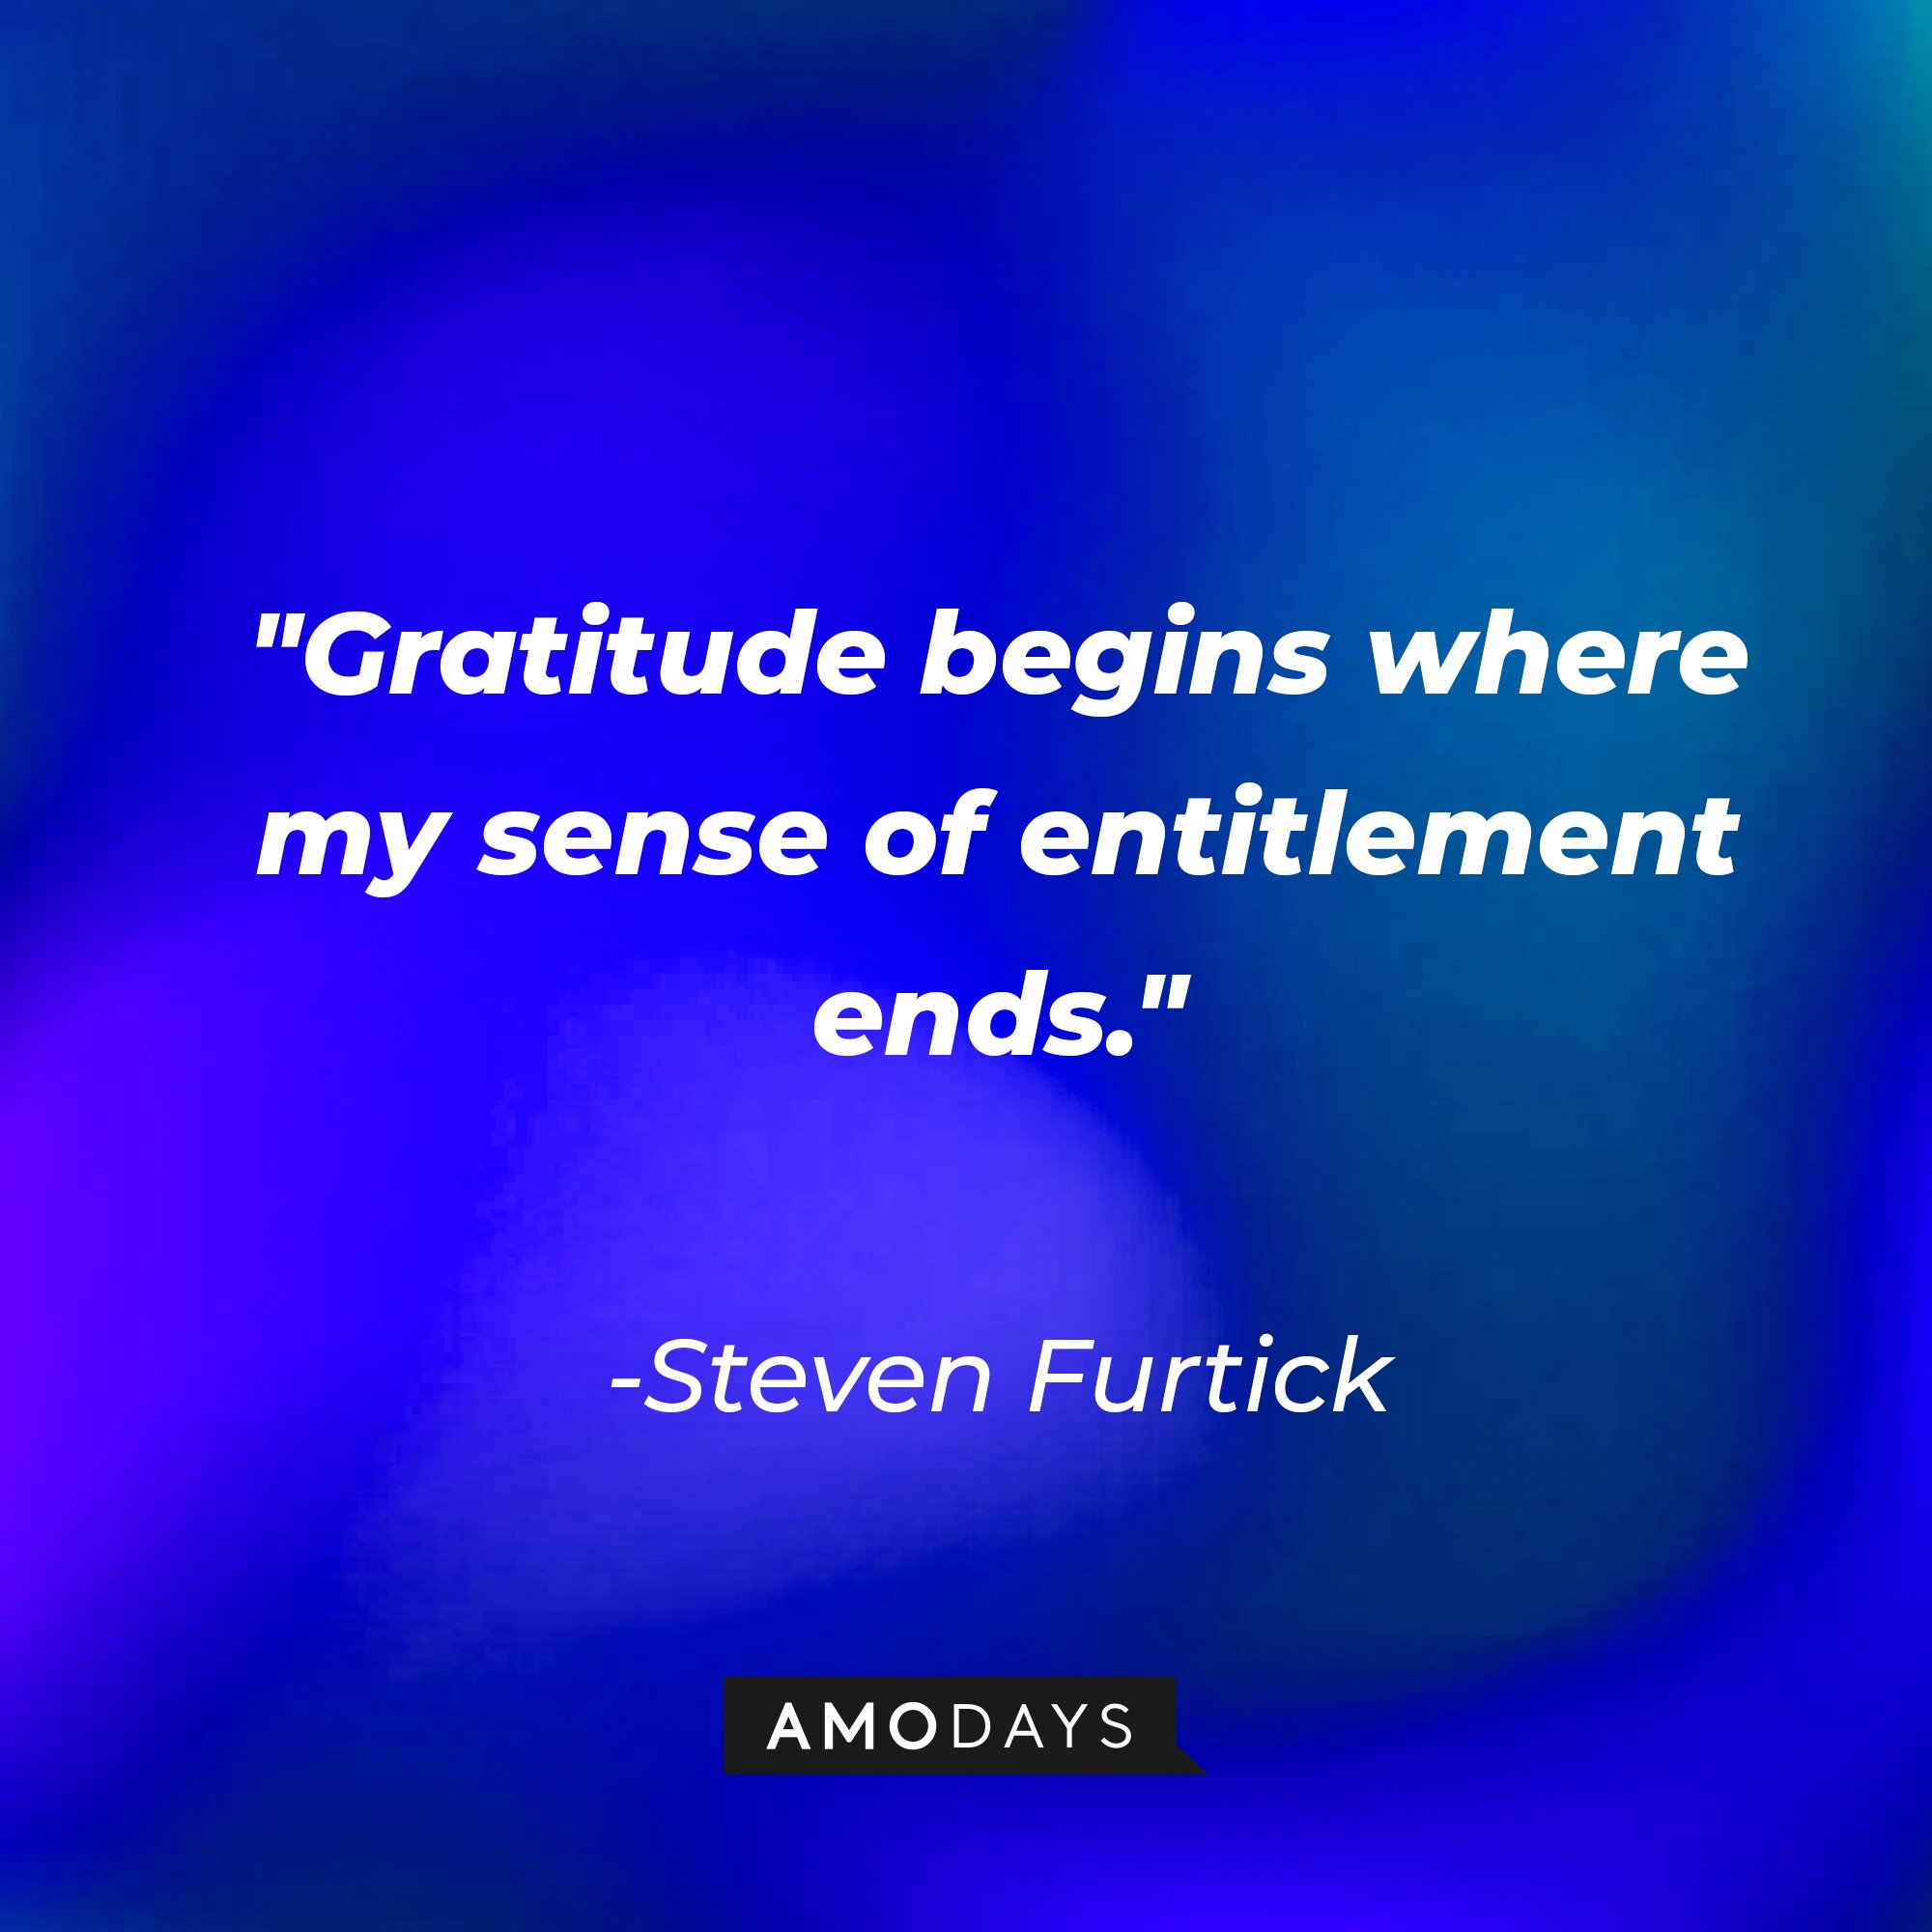 Steven Furtick’s quote: "Gratitude begins where my sense of entitlement ends." | Image: AmoDays